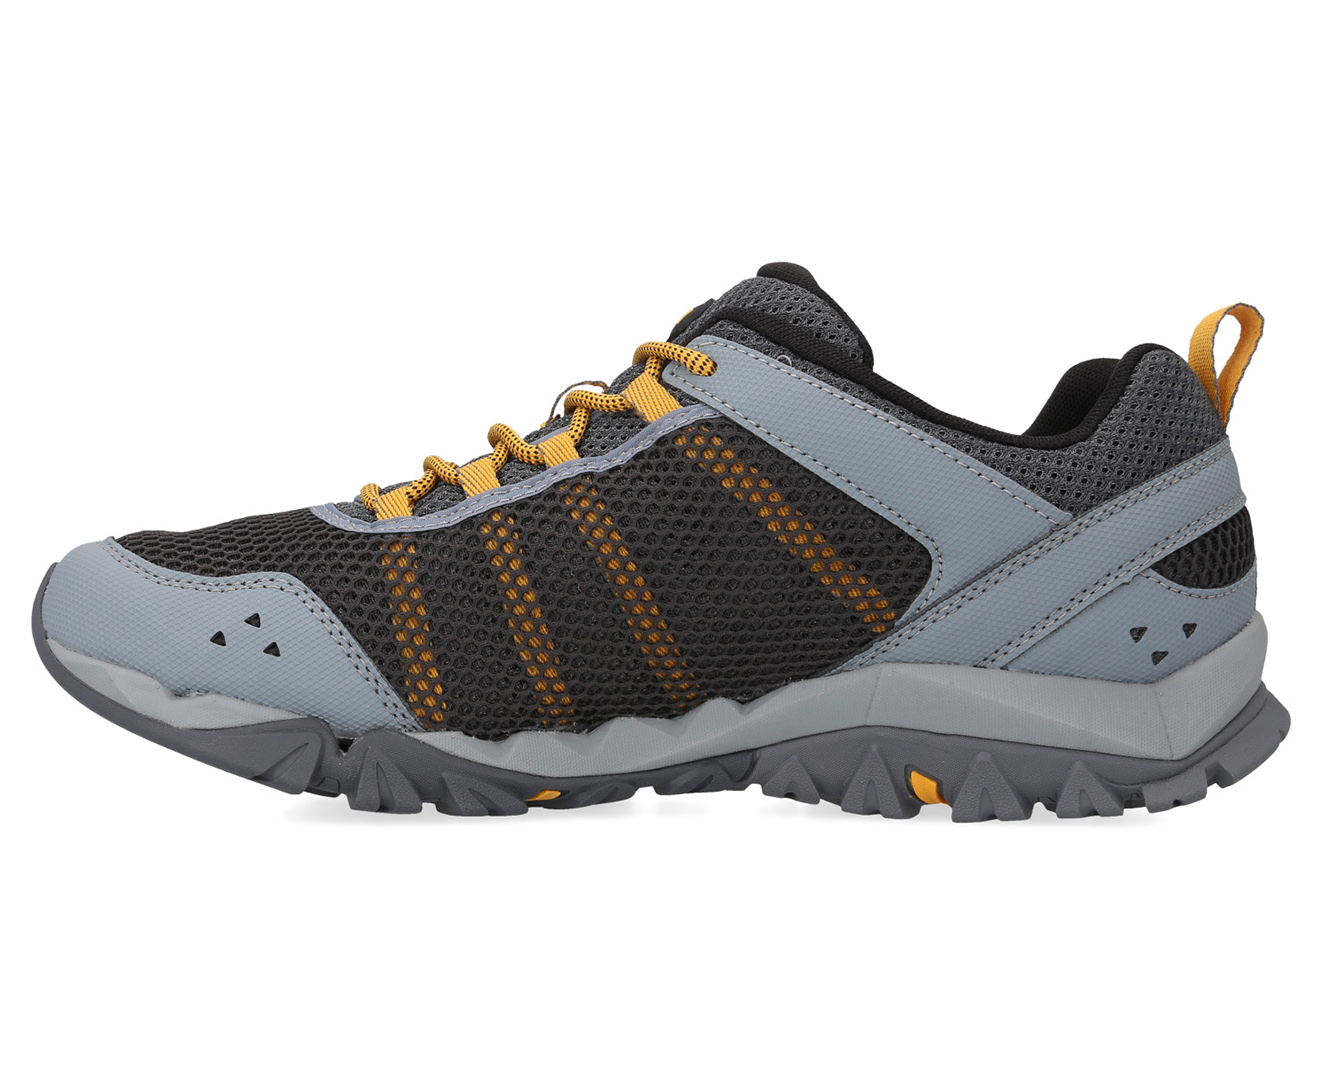 Merrell Men's Riverbed 2 Hiking Trail Shoes - Granite/Gold | Catch.com.au